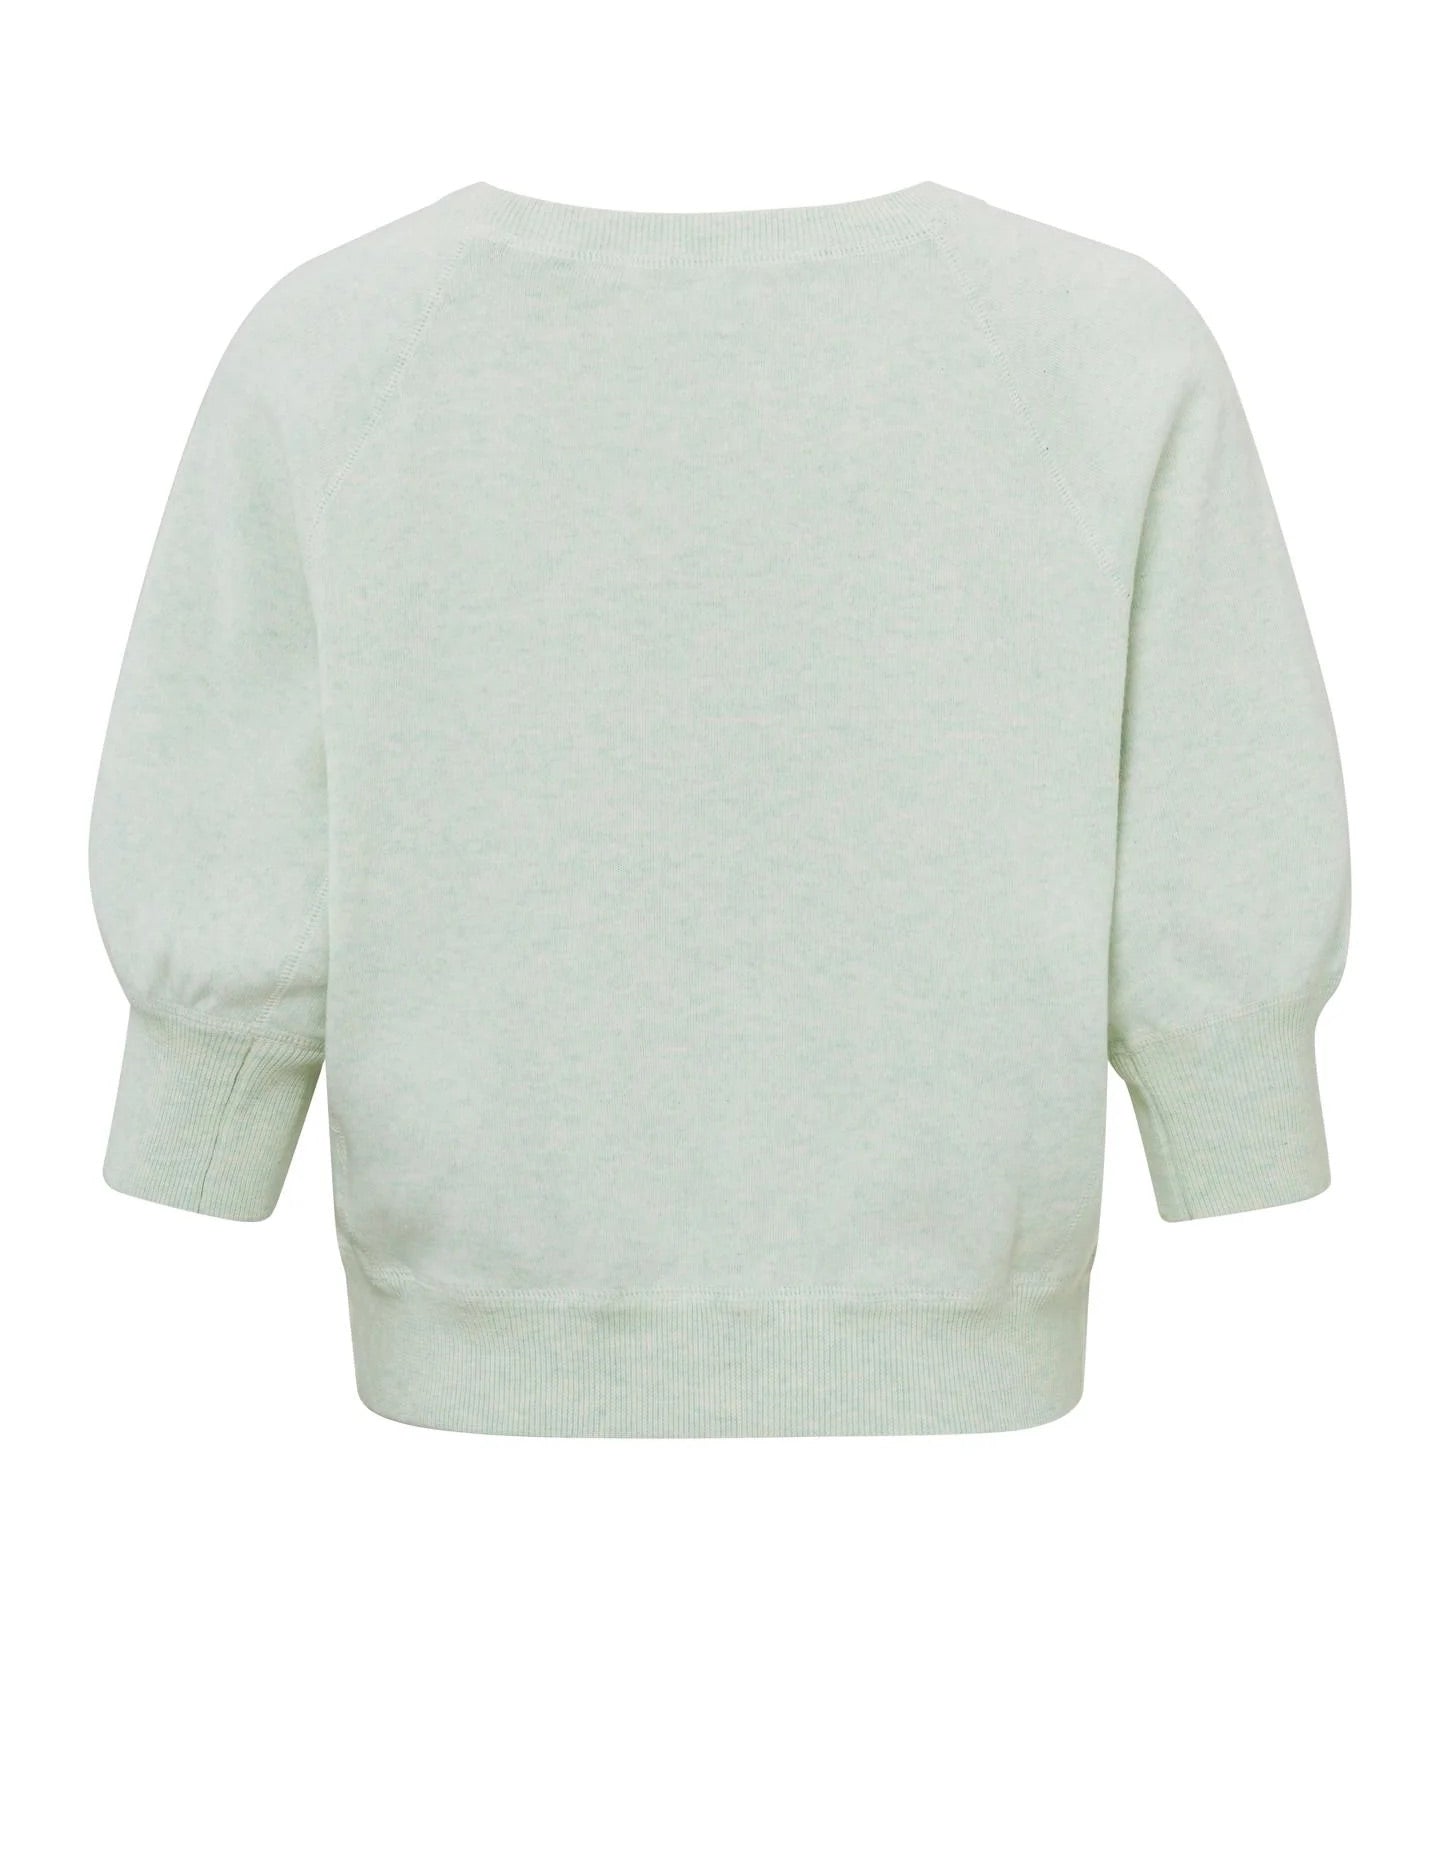 sweater-with-round-neck-and-half-long-raglan-sleeves-hint-of-mint-green-melange_e1441180-1179-4f69-9247-235c7085e7d7_2880x_jpg.jpg